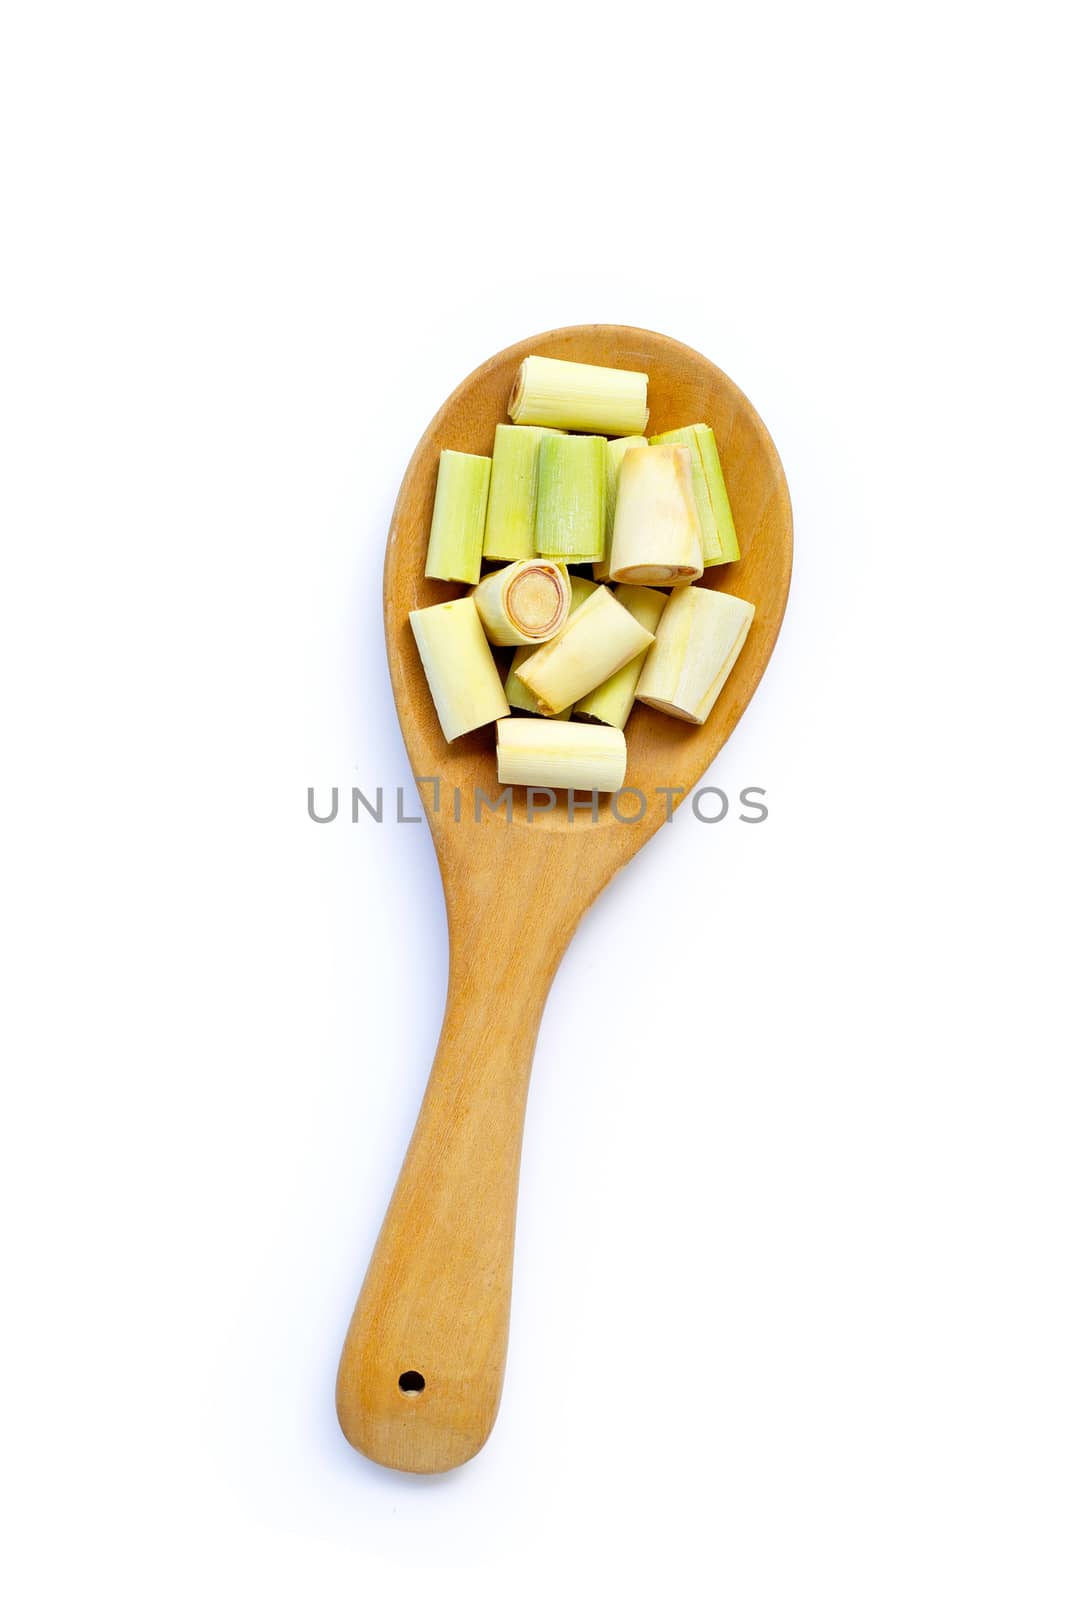 Lemongrass slices on wooden spoon on white  by Bowonpat